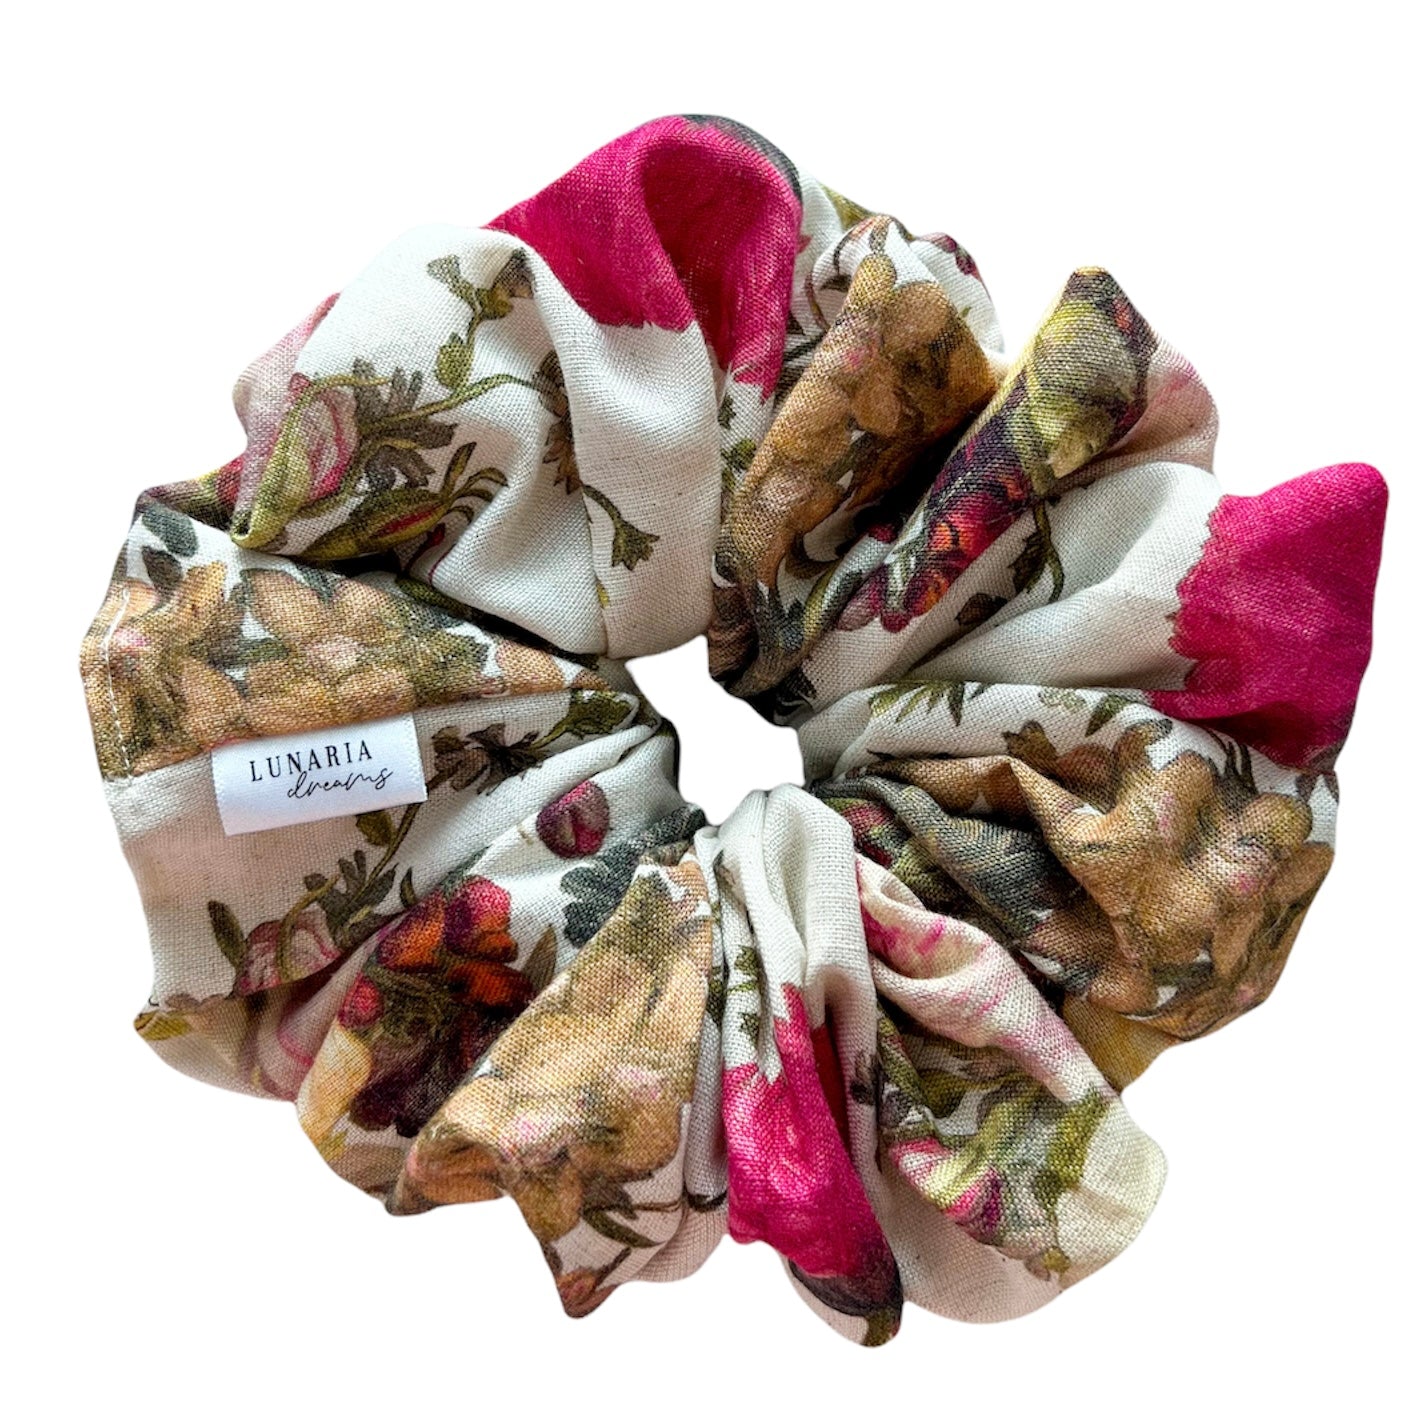 Adrienne Oversized Scrunchie: A beautiful vintage floral scrunchie